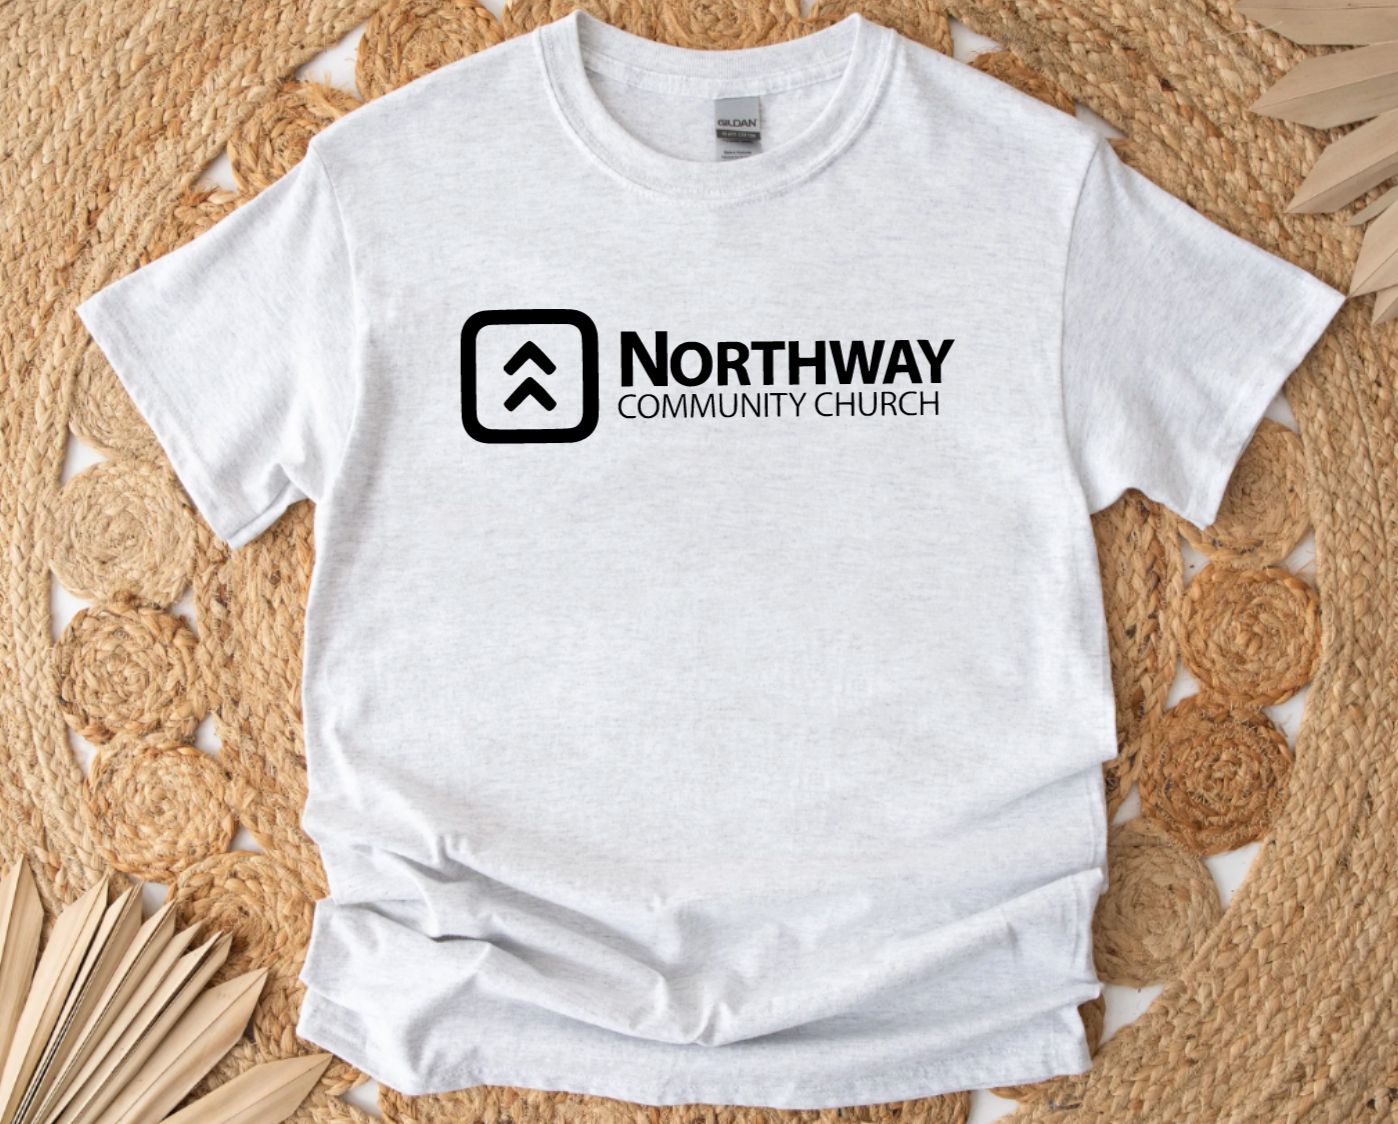 Short Sleeve Tshirt - Black, White, or Red Option Northway Community Church Design